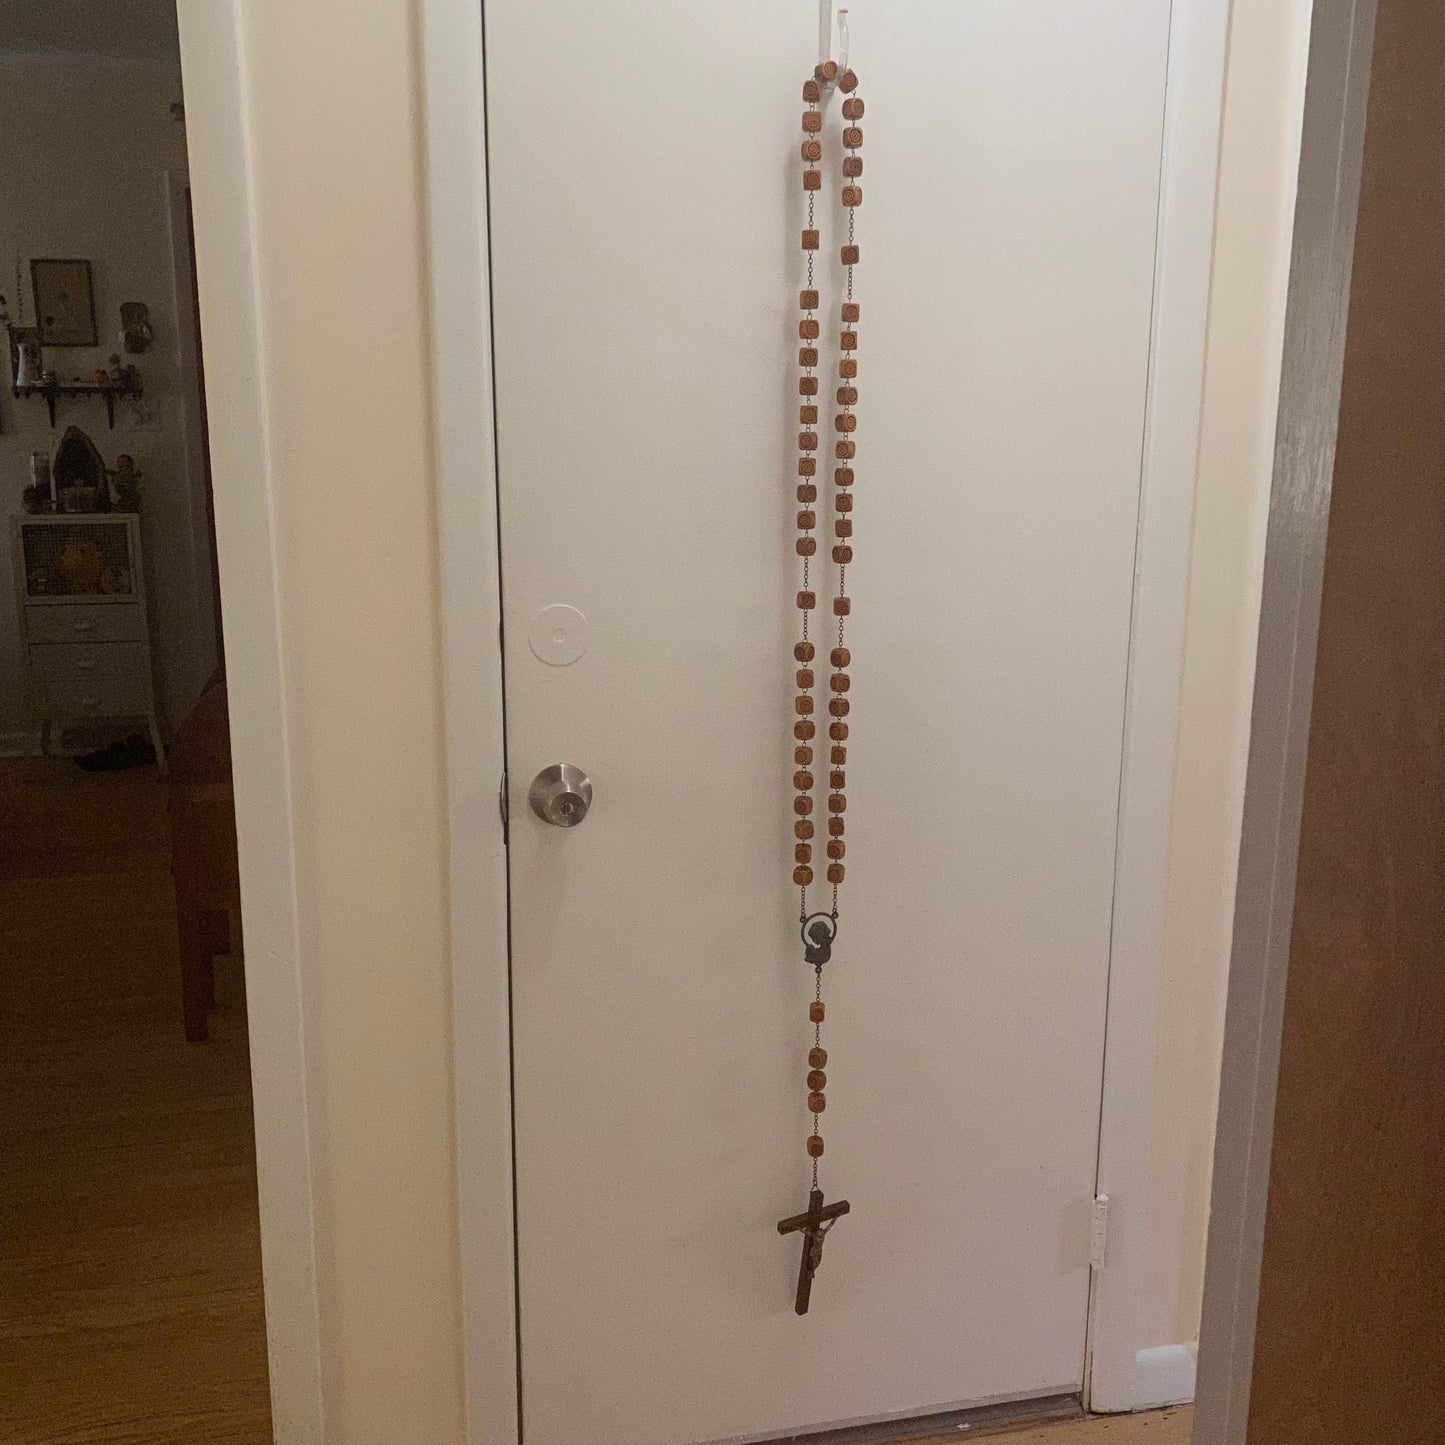 Vintage wall rosary. Large ~58" rosary with wooden prayer beads. Retro religious wall decor. Kitschy catholic gift. Decorative altar decor.